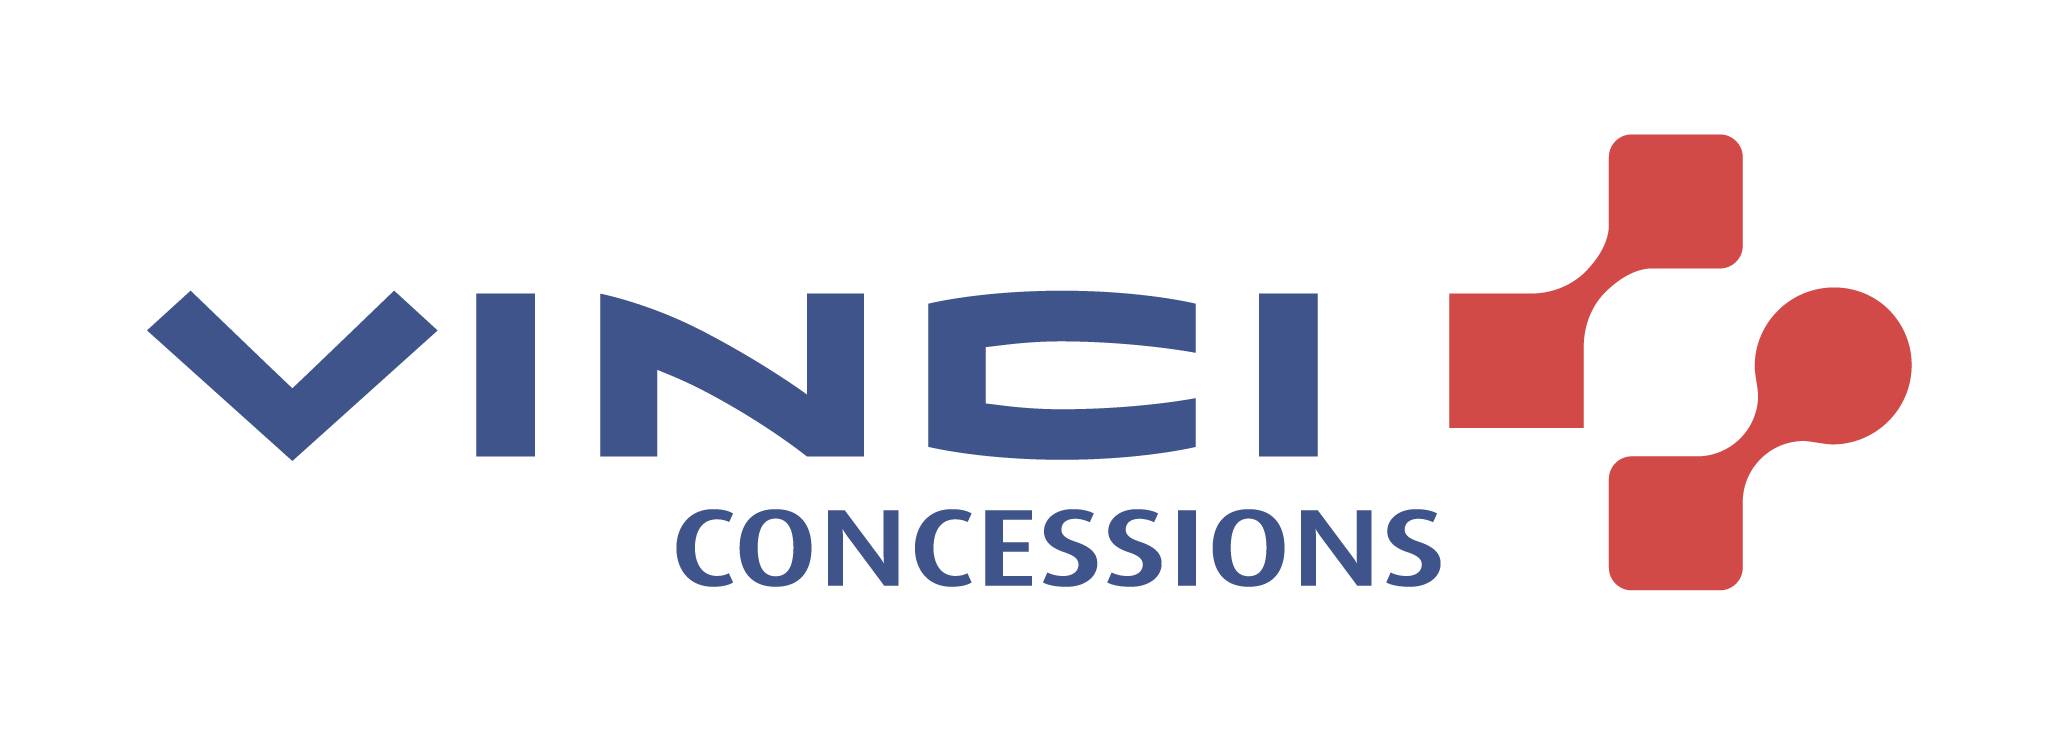 Vinci Consession_логотип